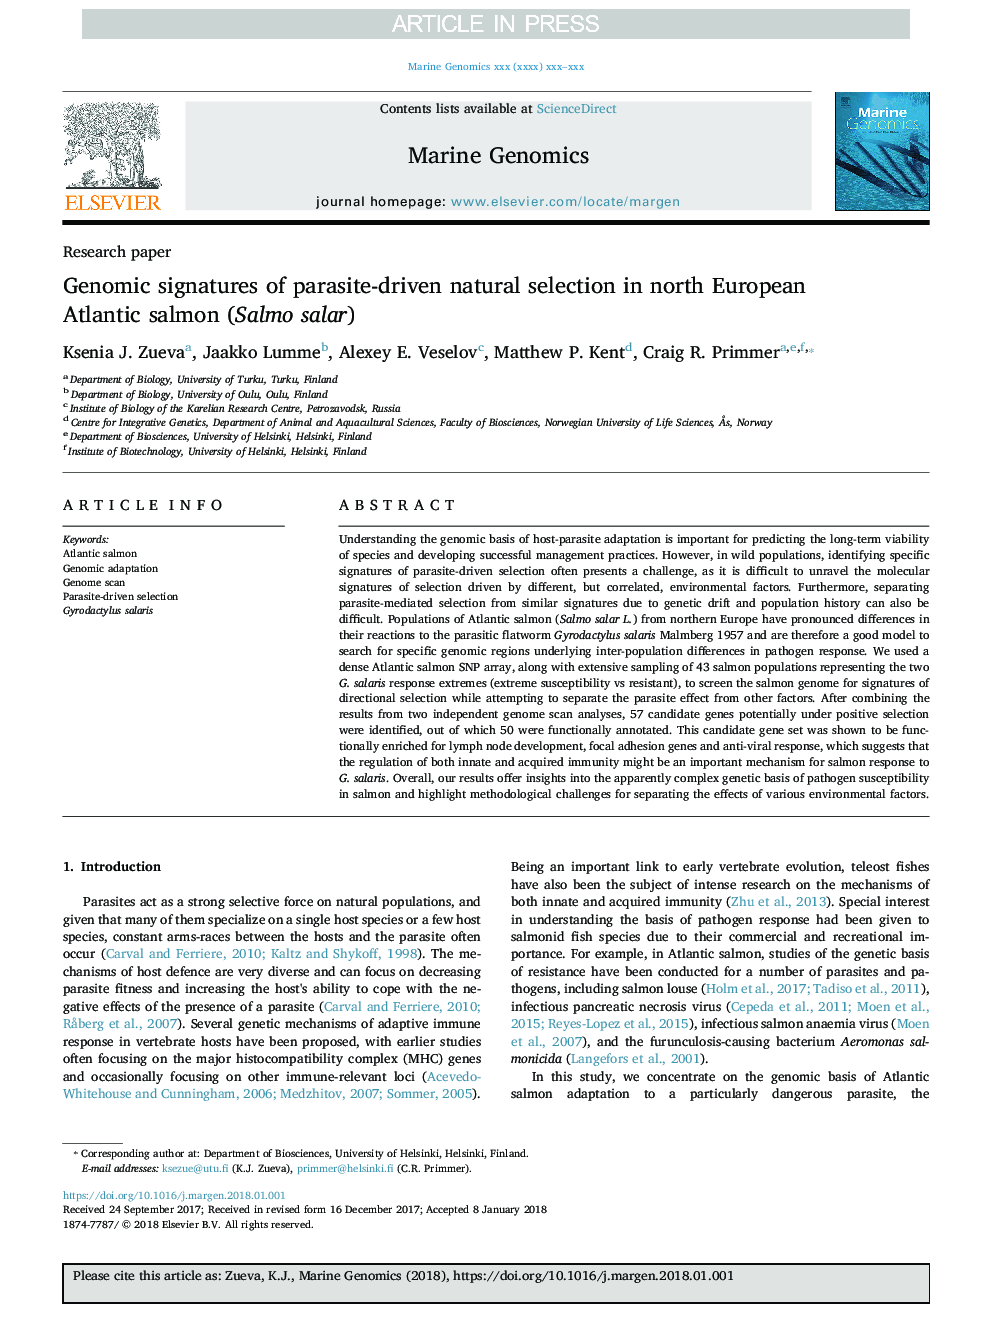 Genomic signatures of parasite-driven natural selection in north European Atlantic salmon (Salmo salar)